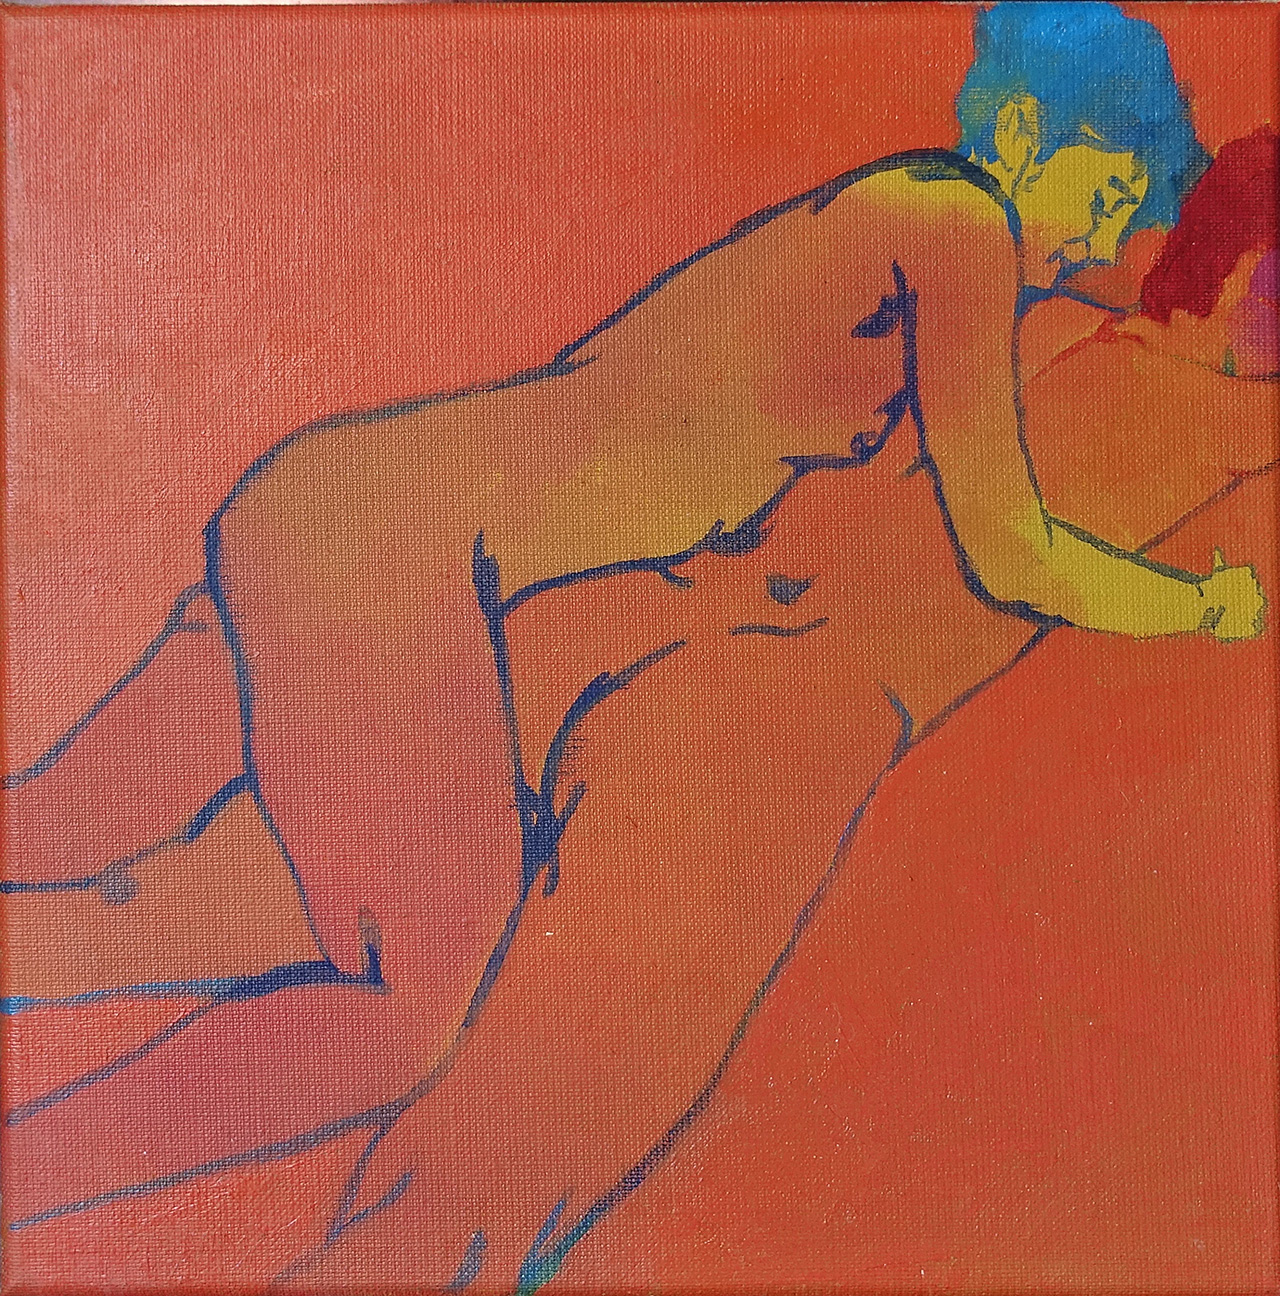 Agnieszka Sandomierz - After (Tempera on canvas | Size: 38 x 38 cm | Price: 3500 PLN)